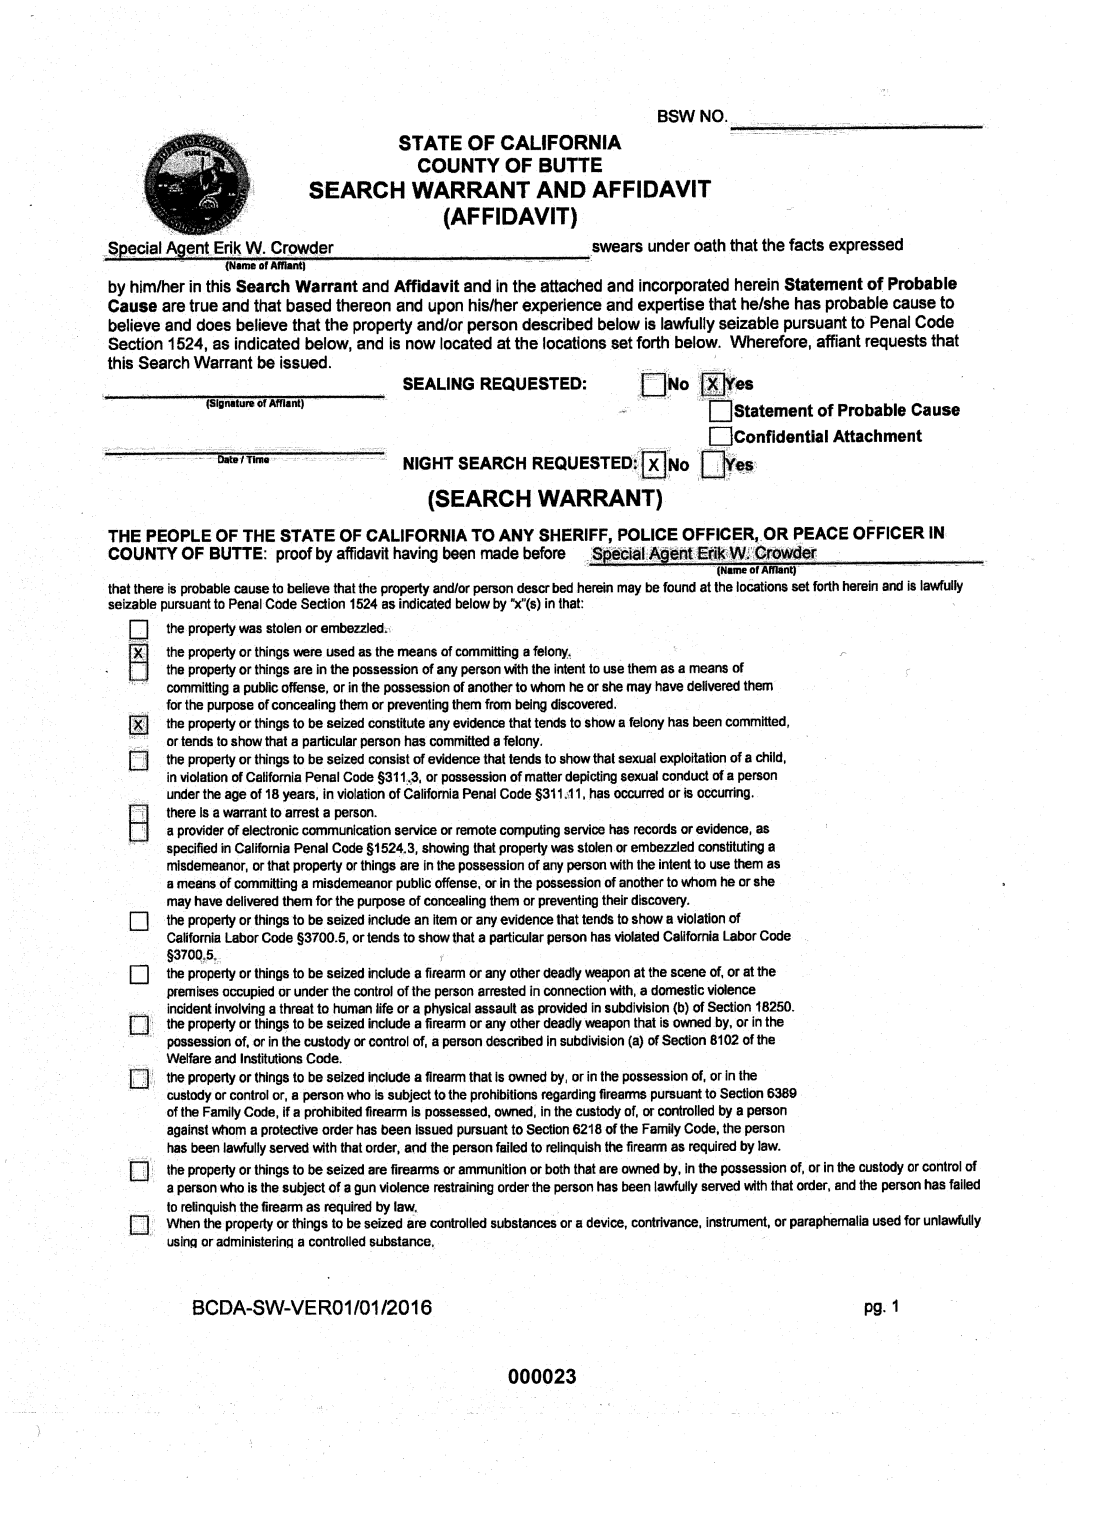 Affidavit for search warrant 1